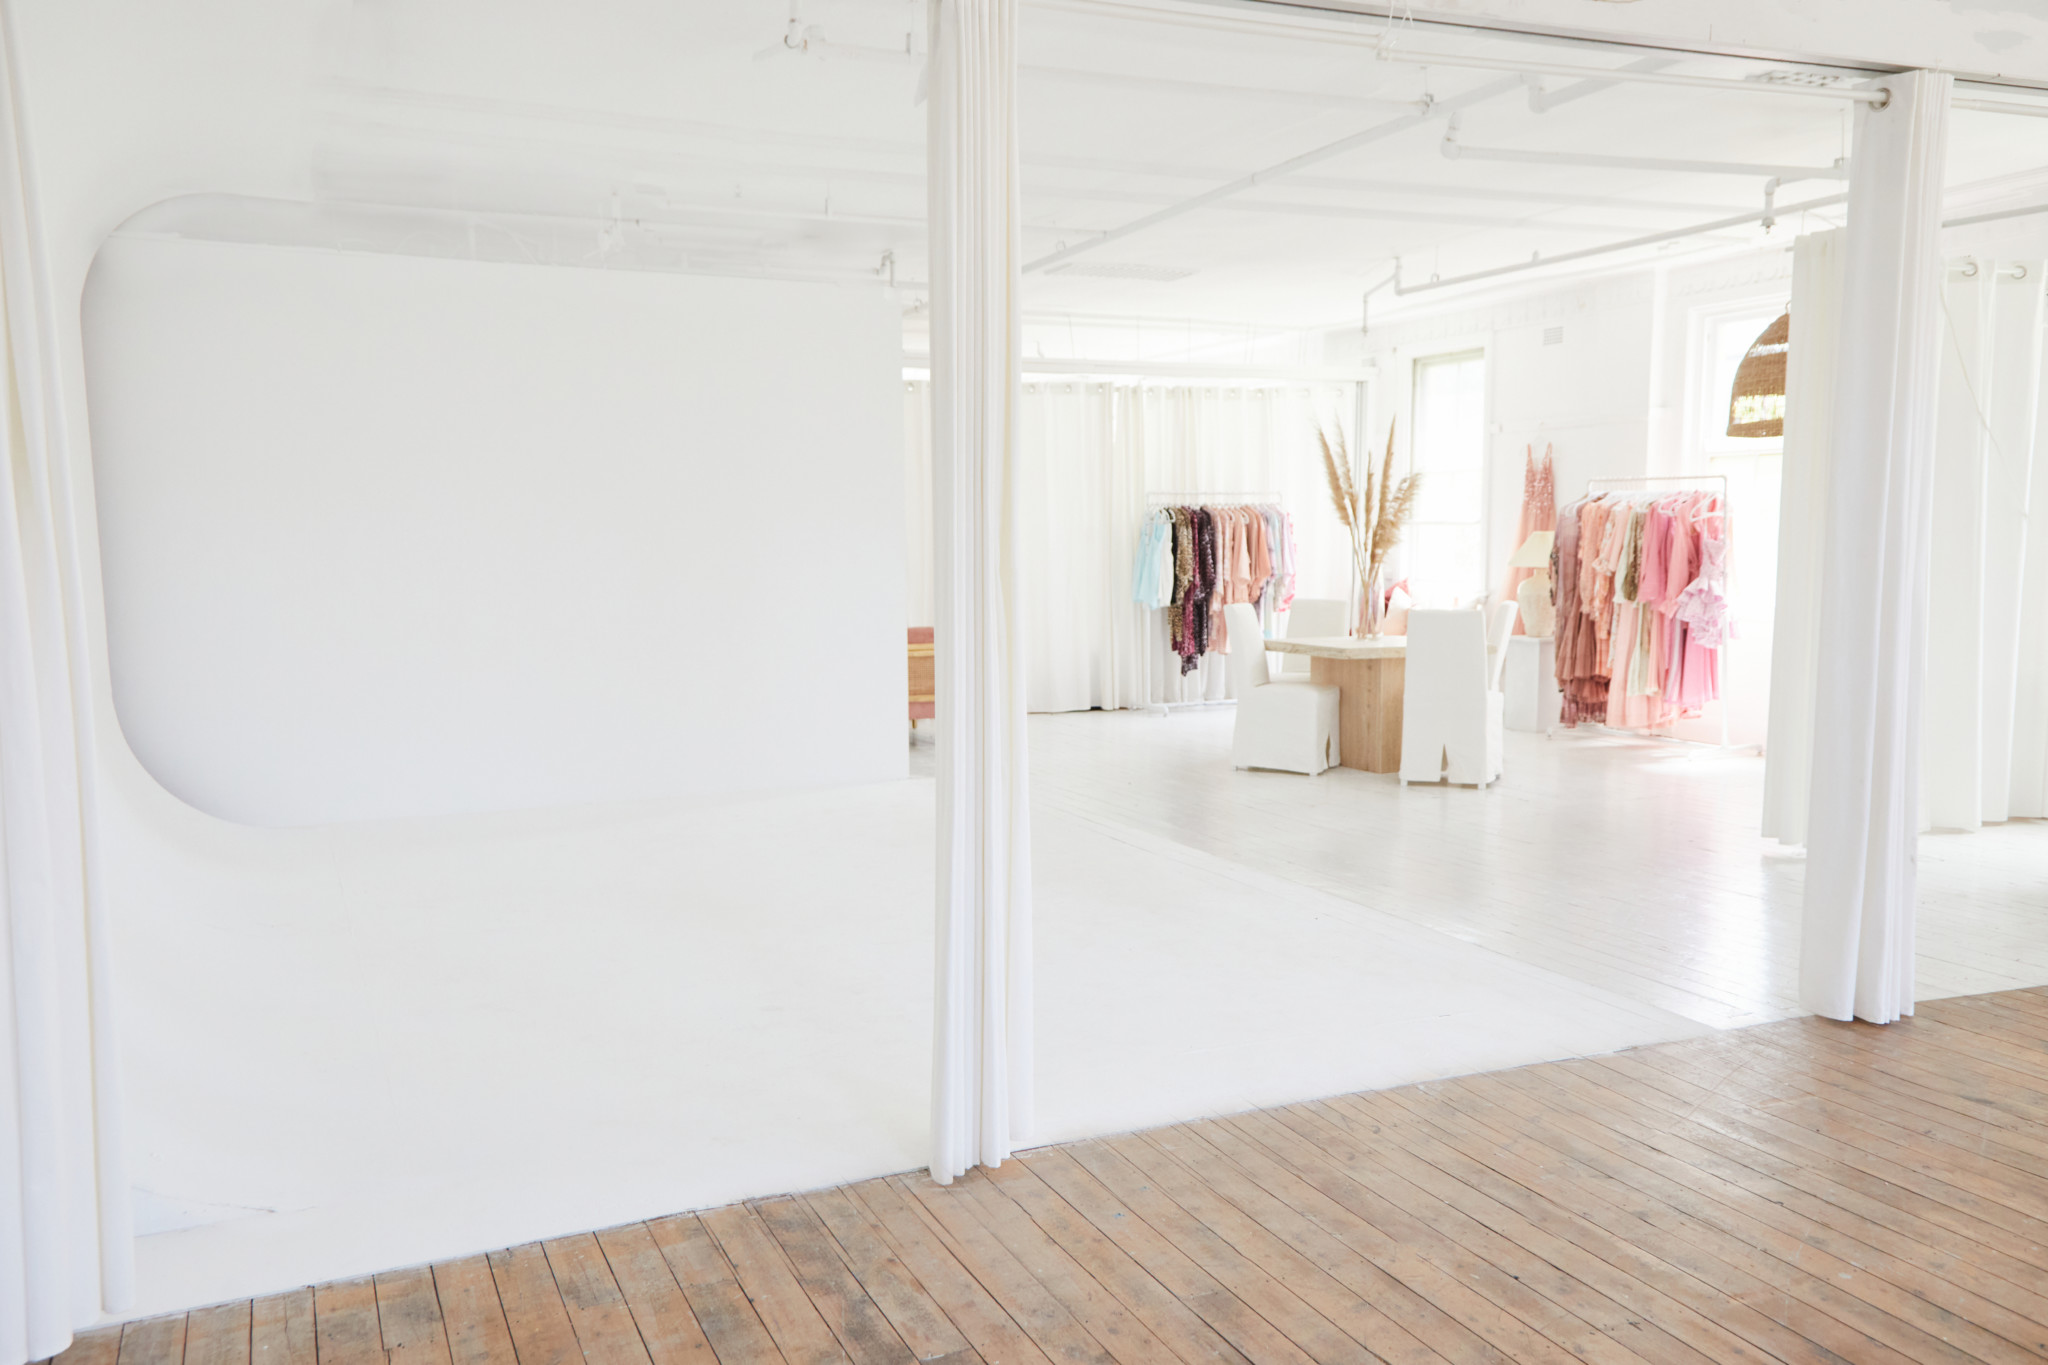 Studio NSM – Beautiful Warehouse Space